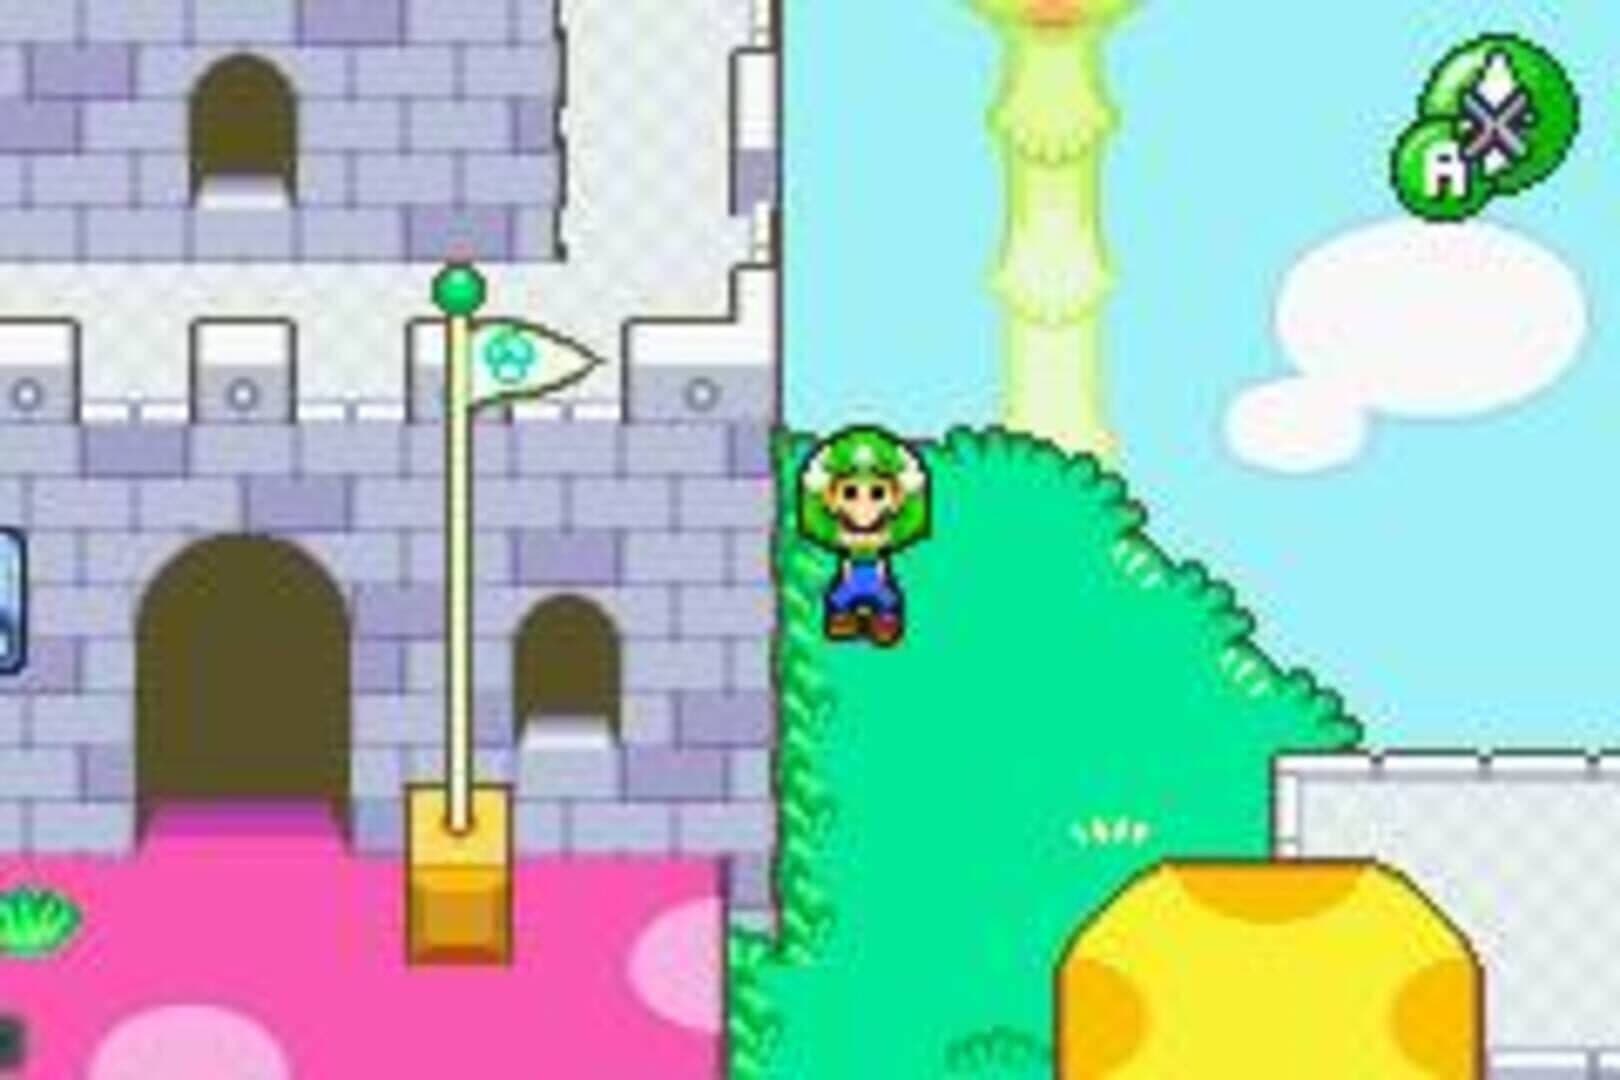 Mario & Luigi: Superstar Saga Image